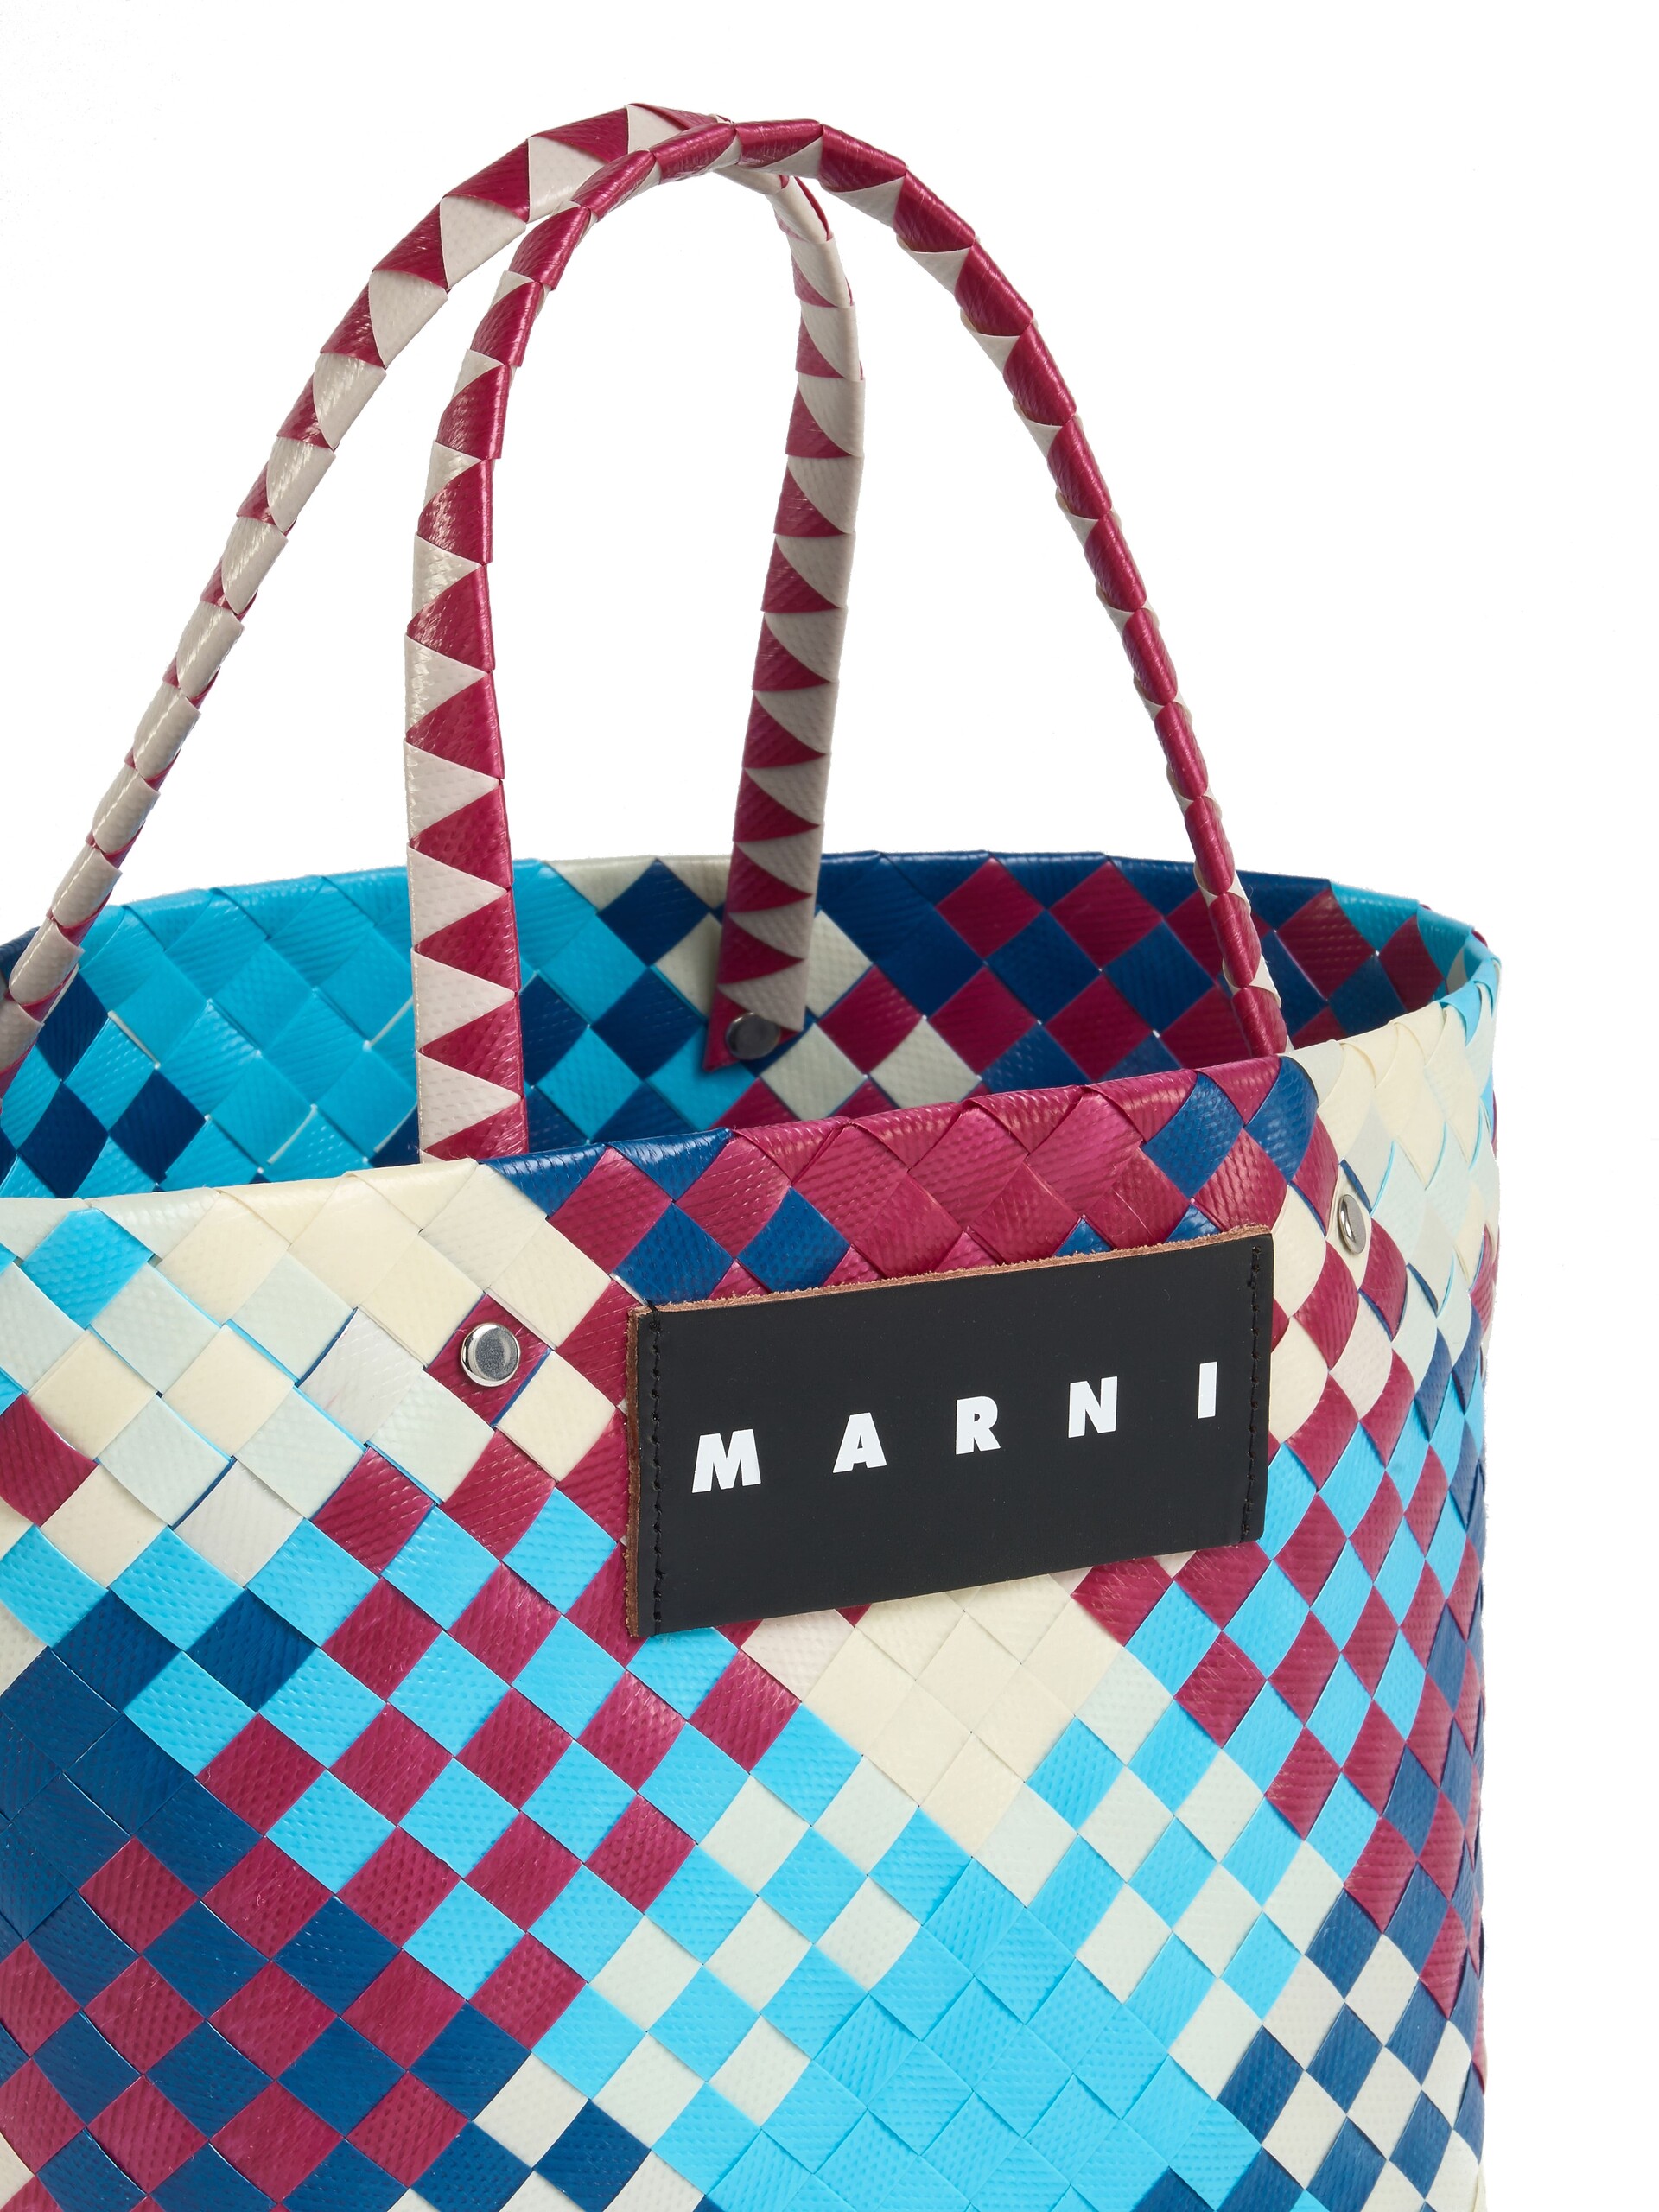 Multicolour MARNI MARKET MINI BASKET bag - Shopping Bags - Image 4